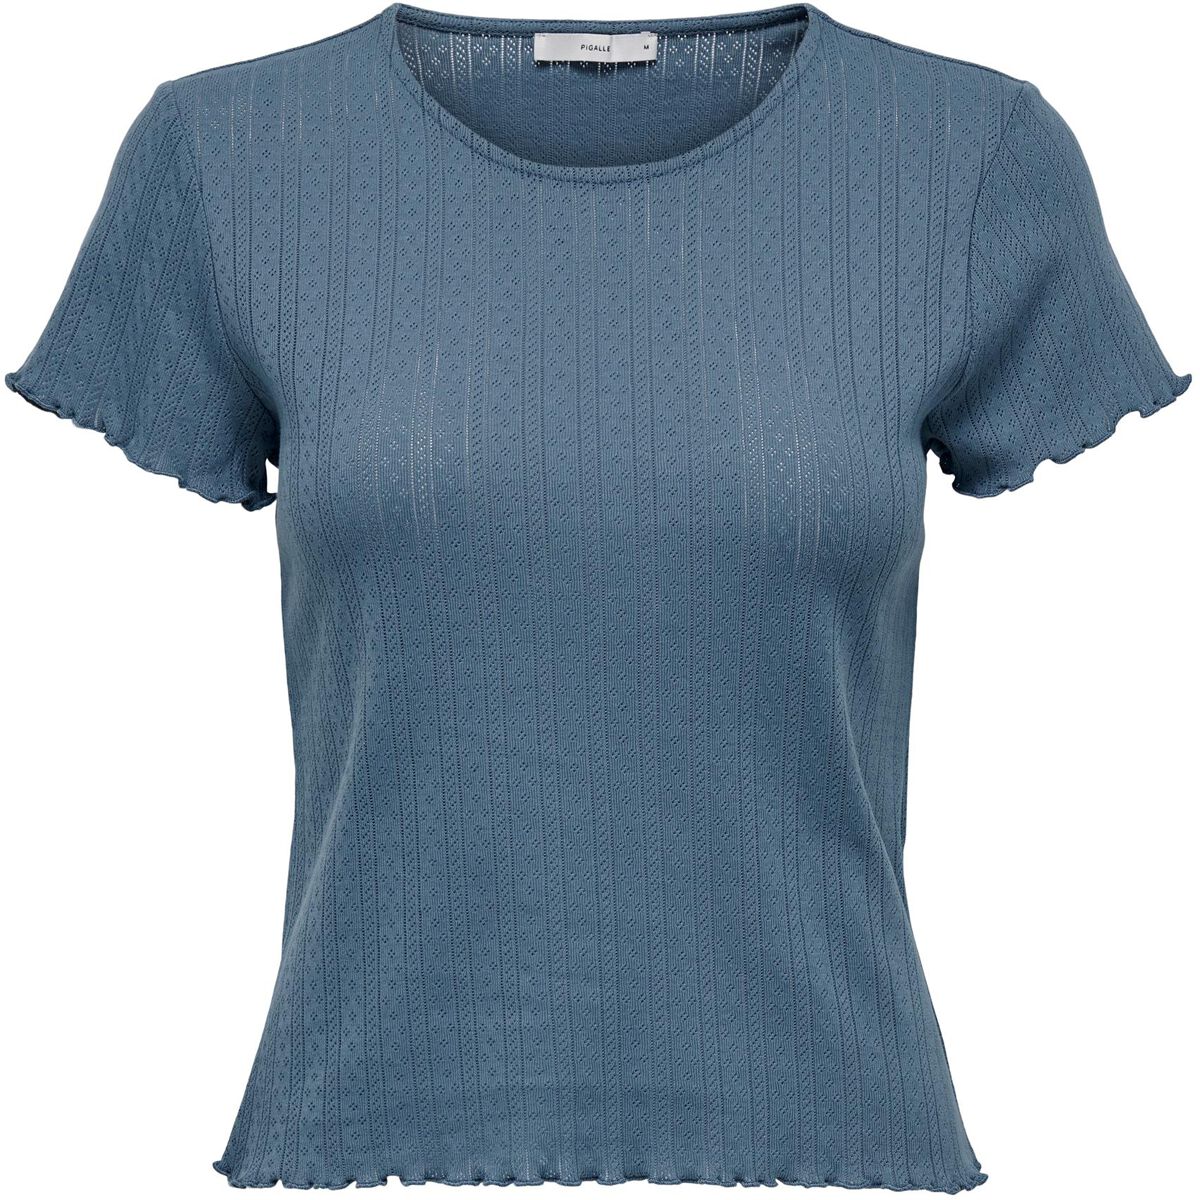 Only Onlcarlotta S/S Top T-Shirt blau in M